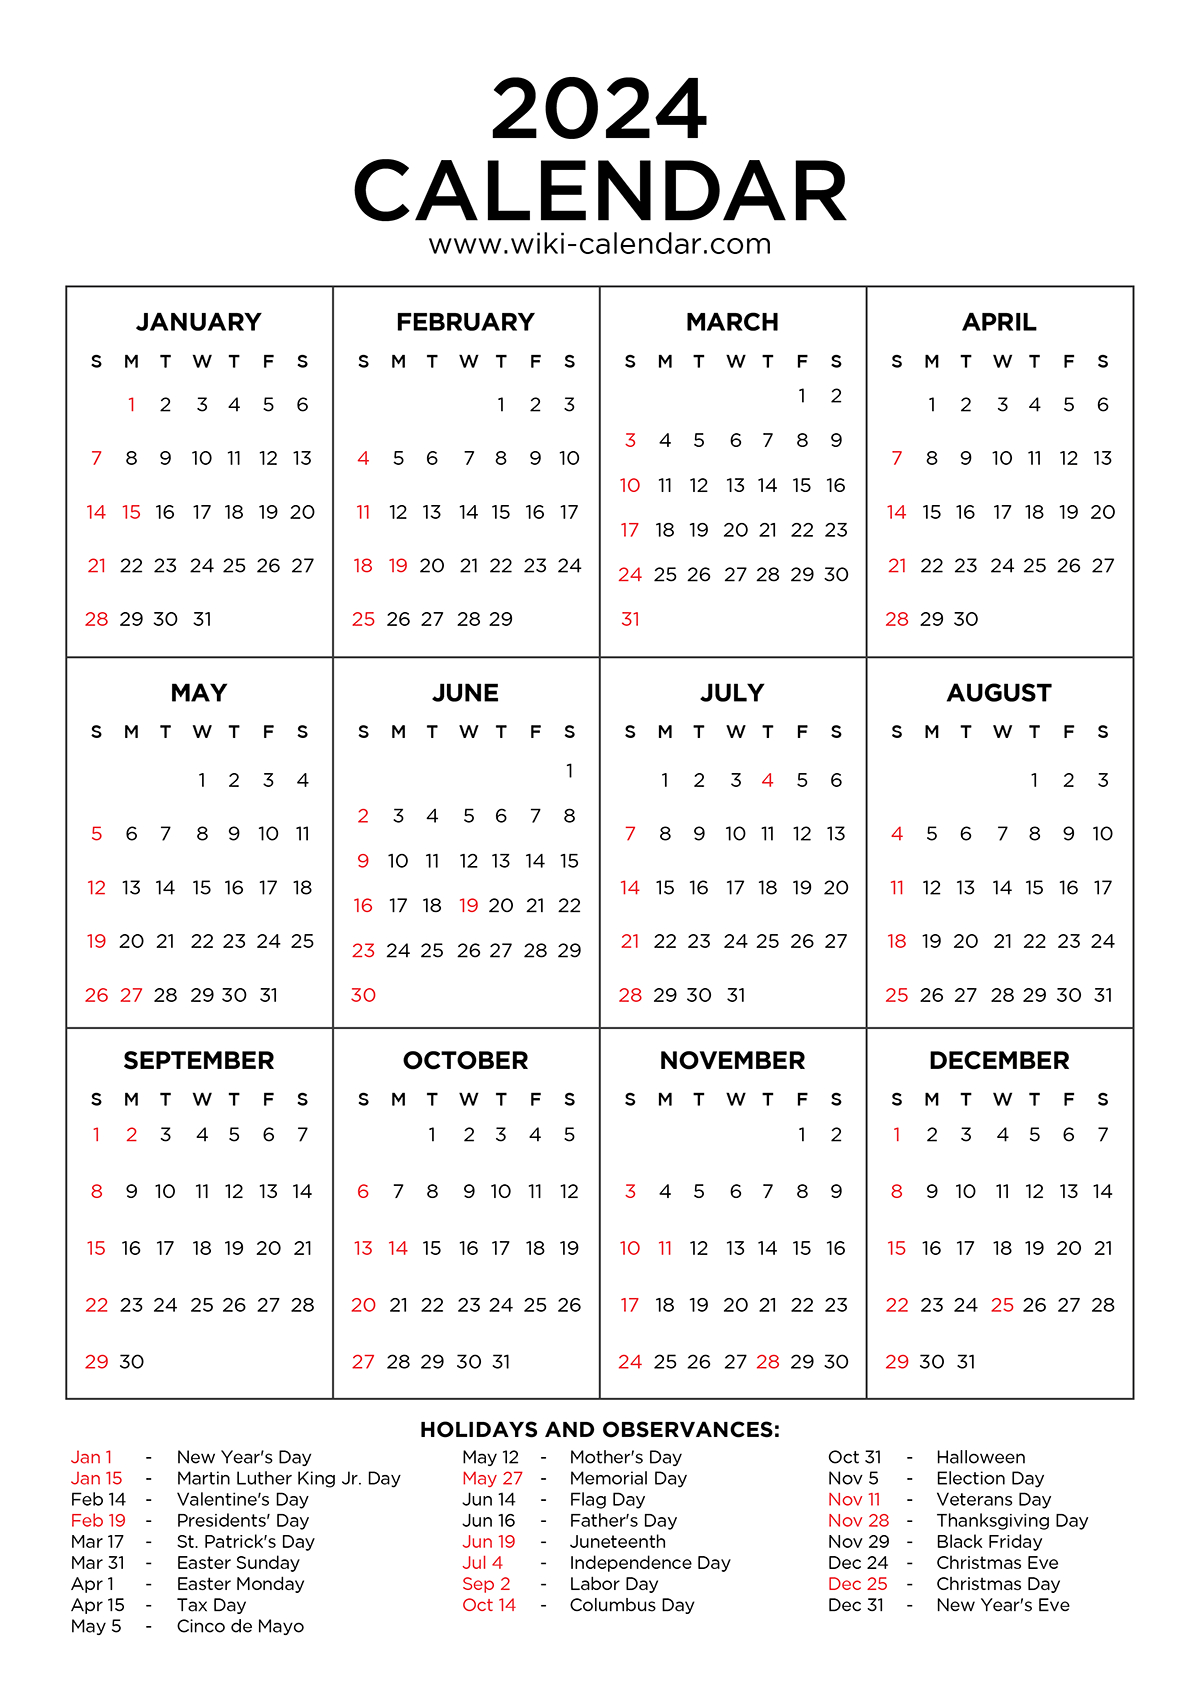 Year 2024 Calendar Printable With Holidays - Wiki Calendar | Free Printable 2024 Calendar With Holidays